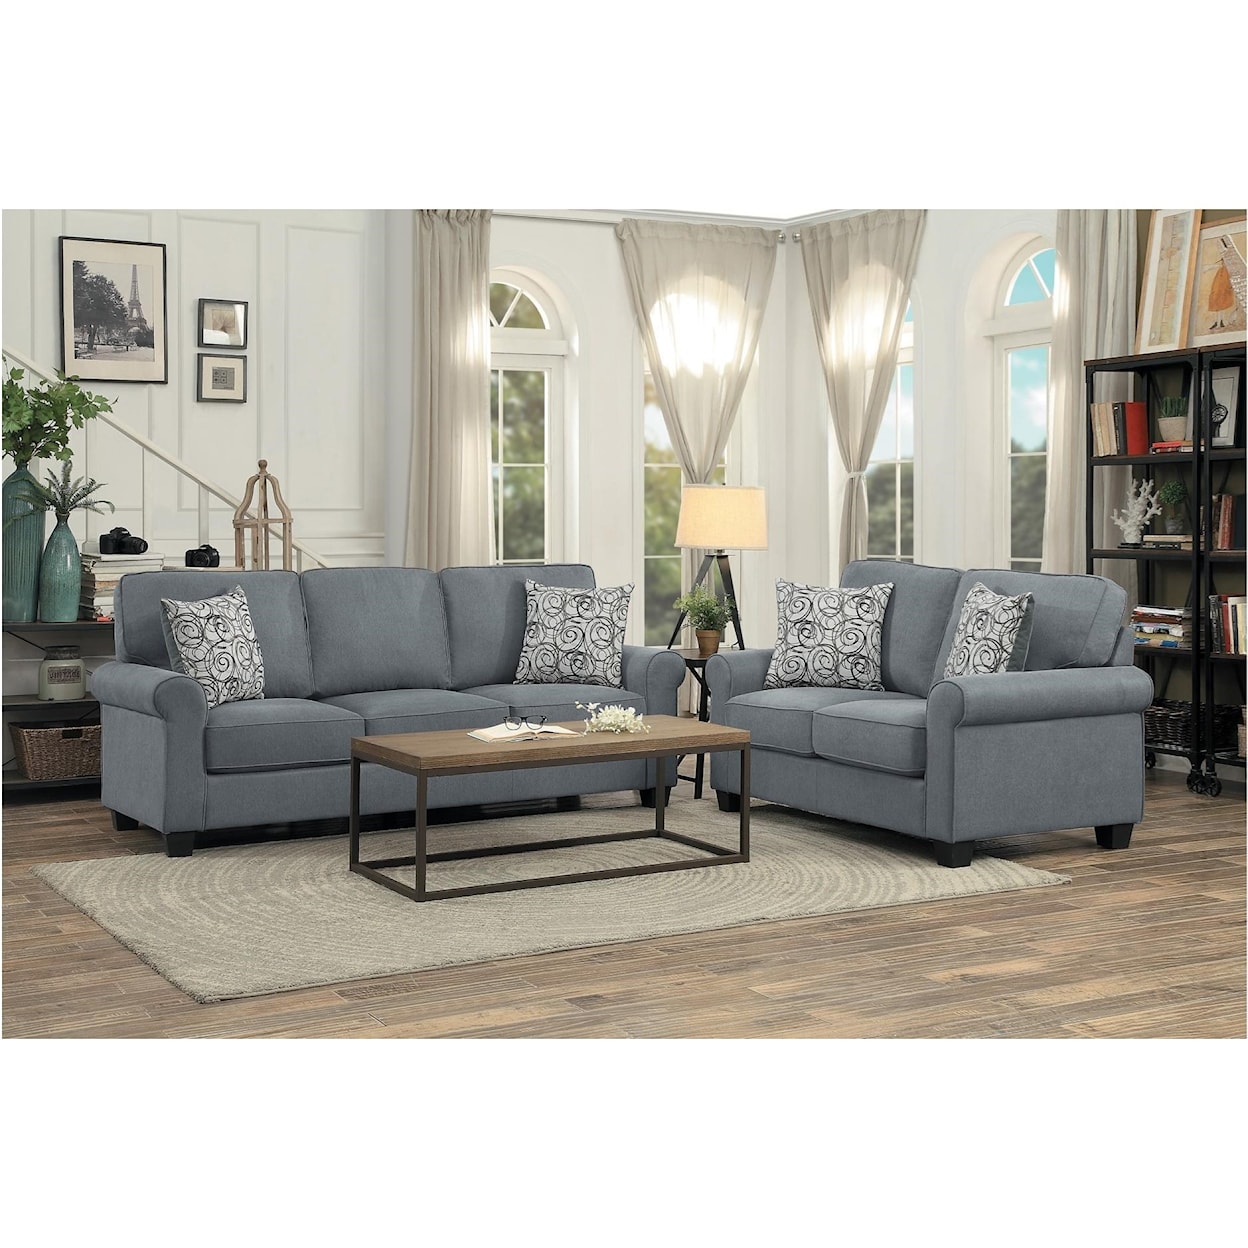 Homelegance Furniture Selkirk Living Room Group